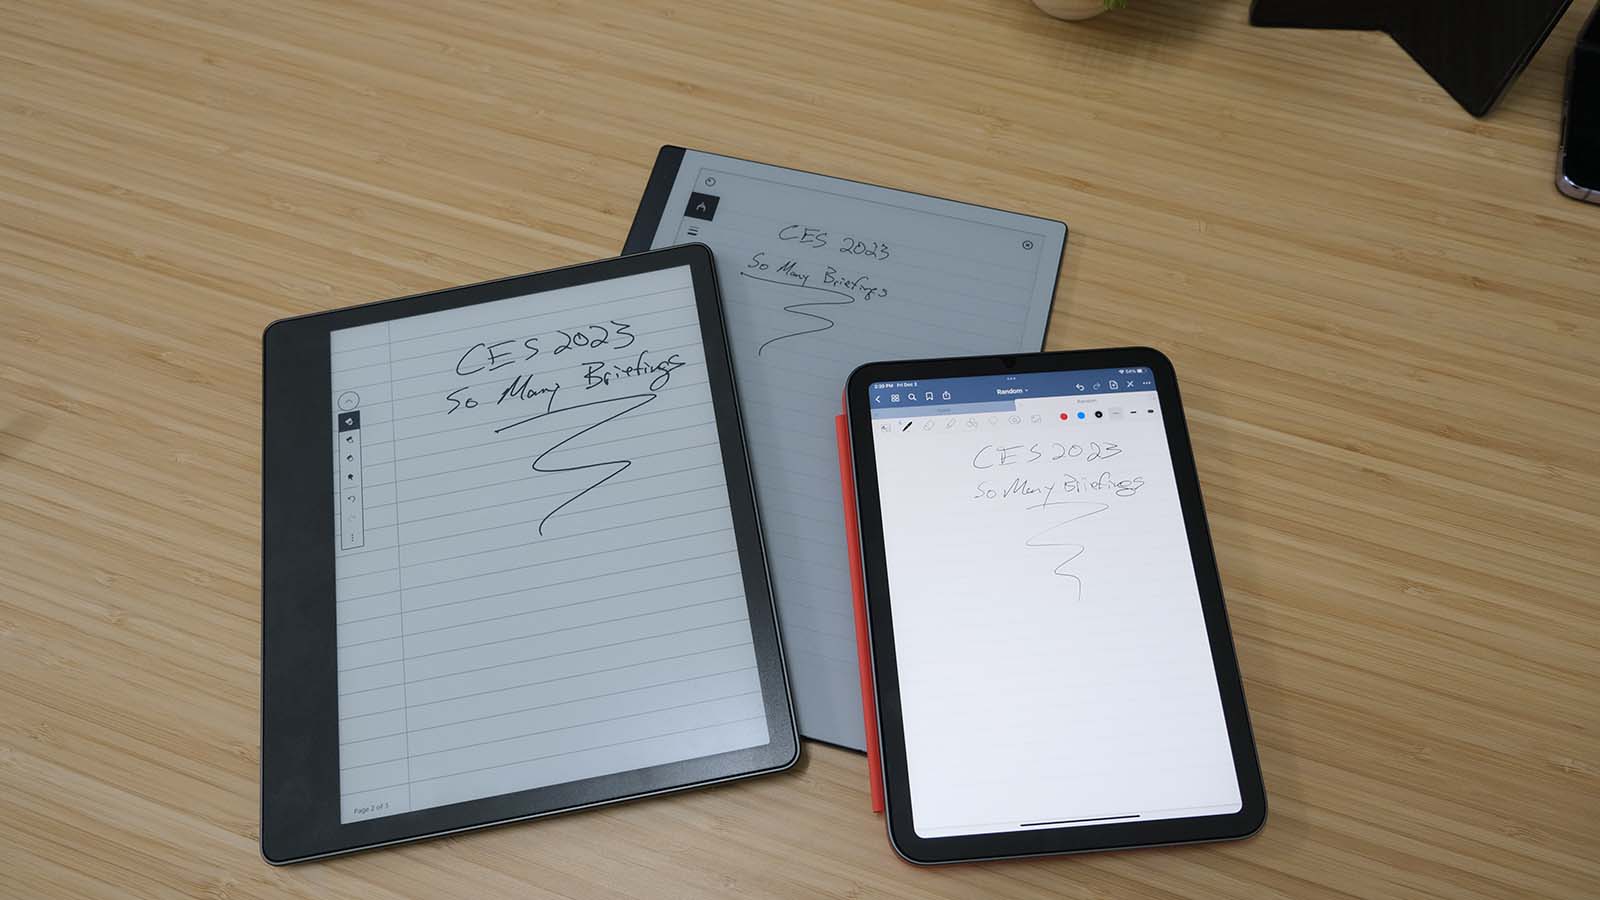 Kindle Scribe vs. ReMarkable 2 vs. iPad Mini